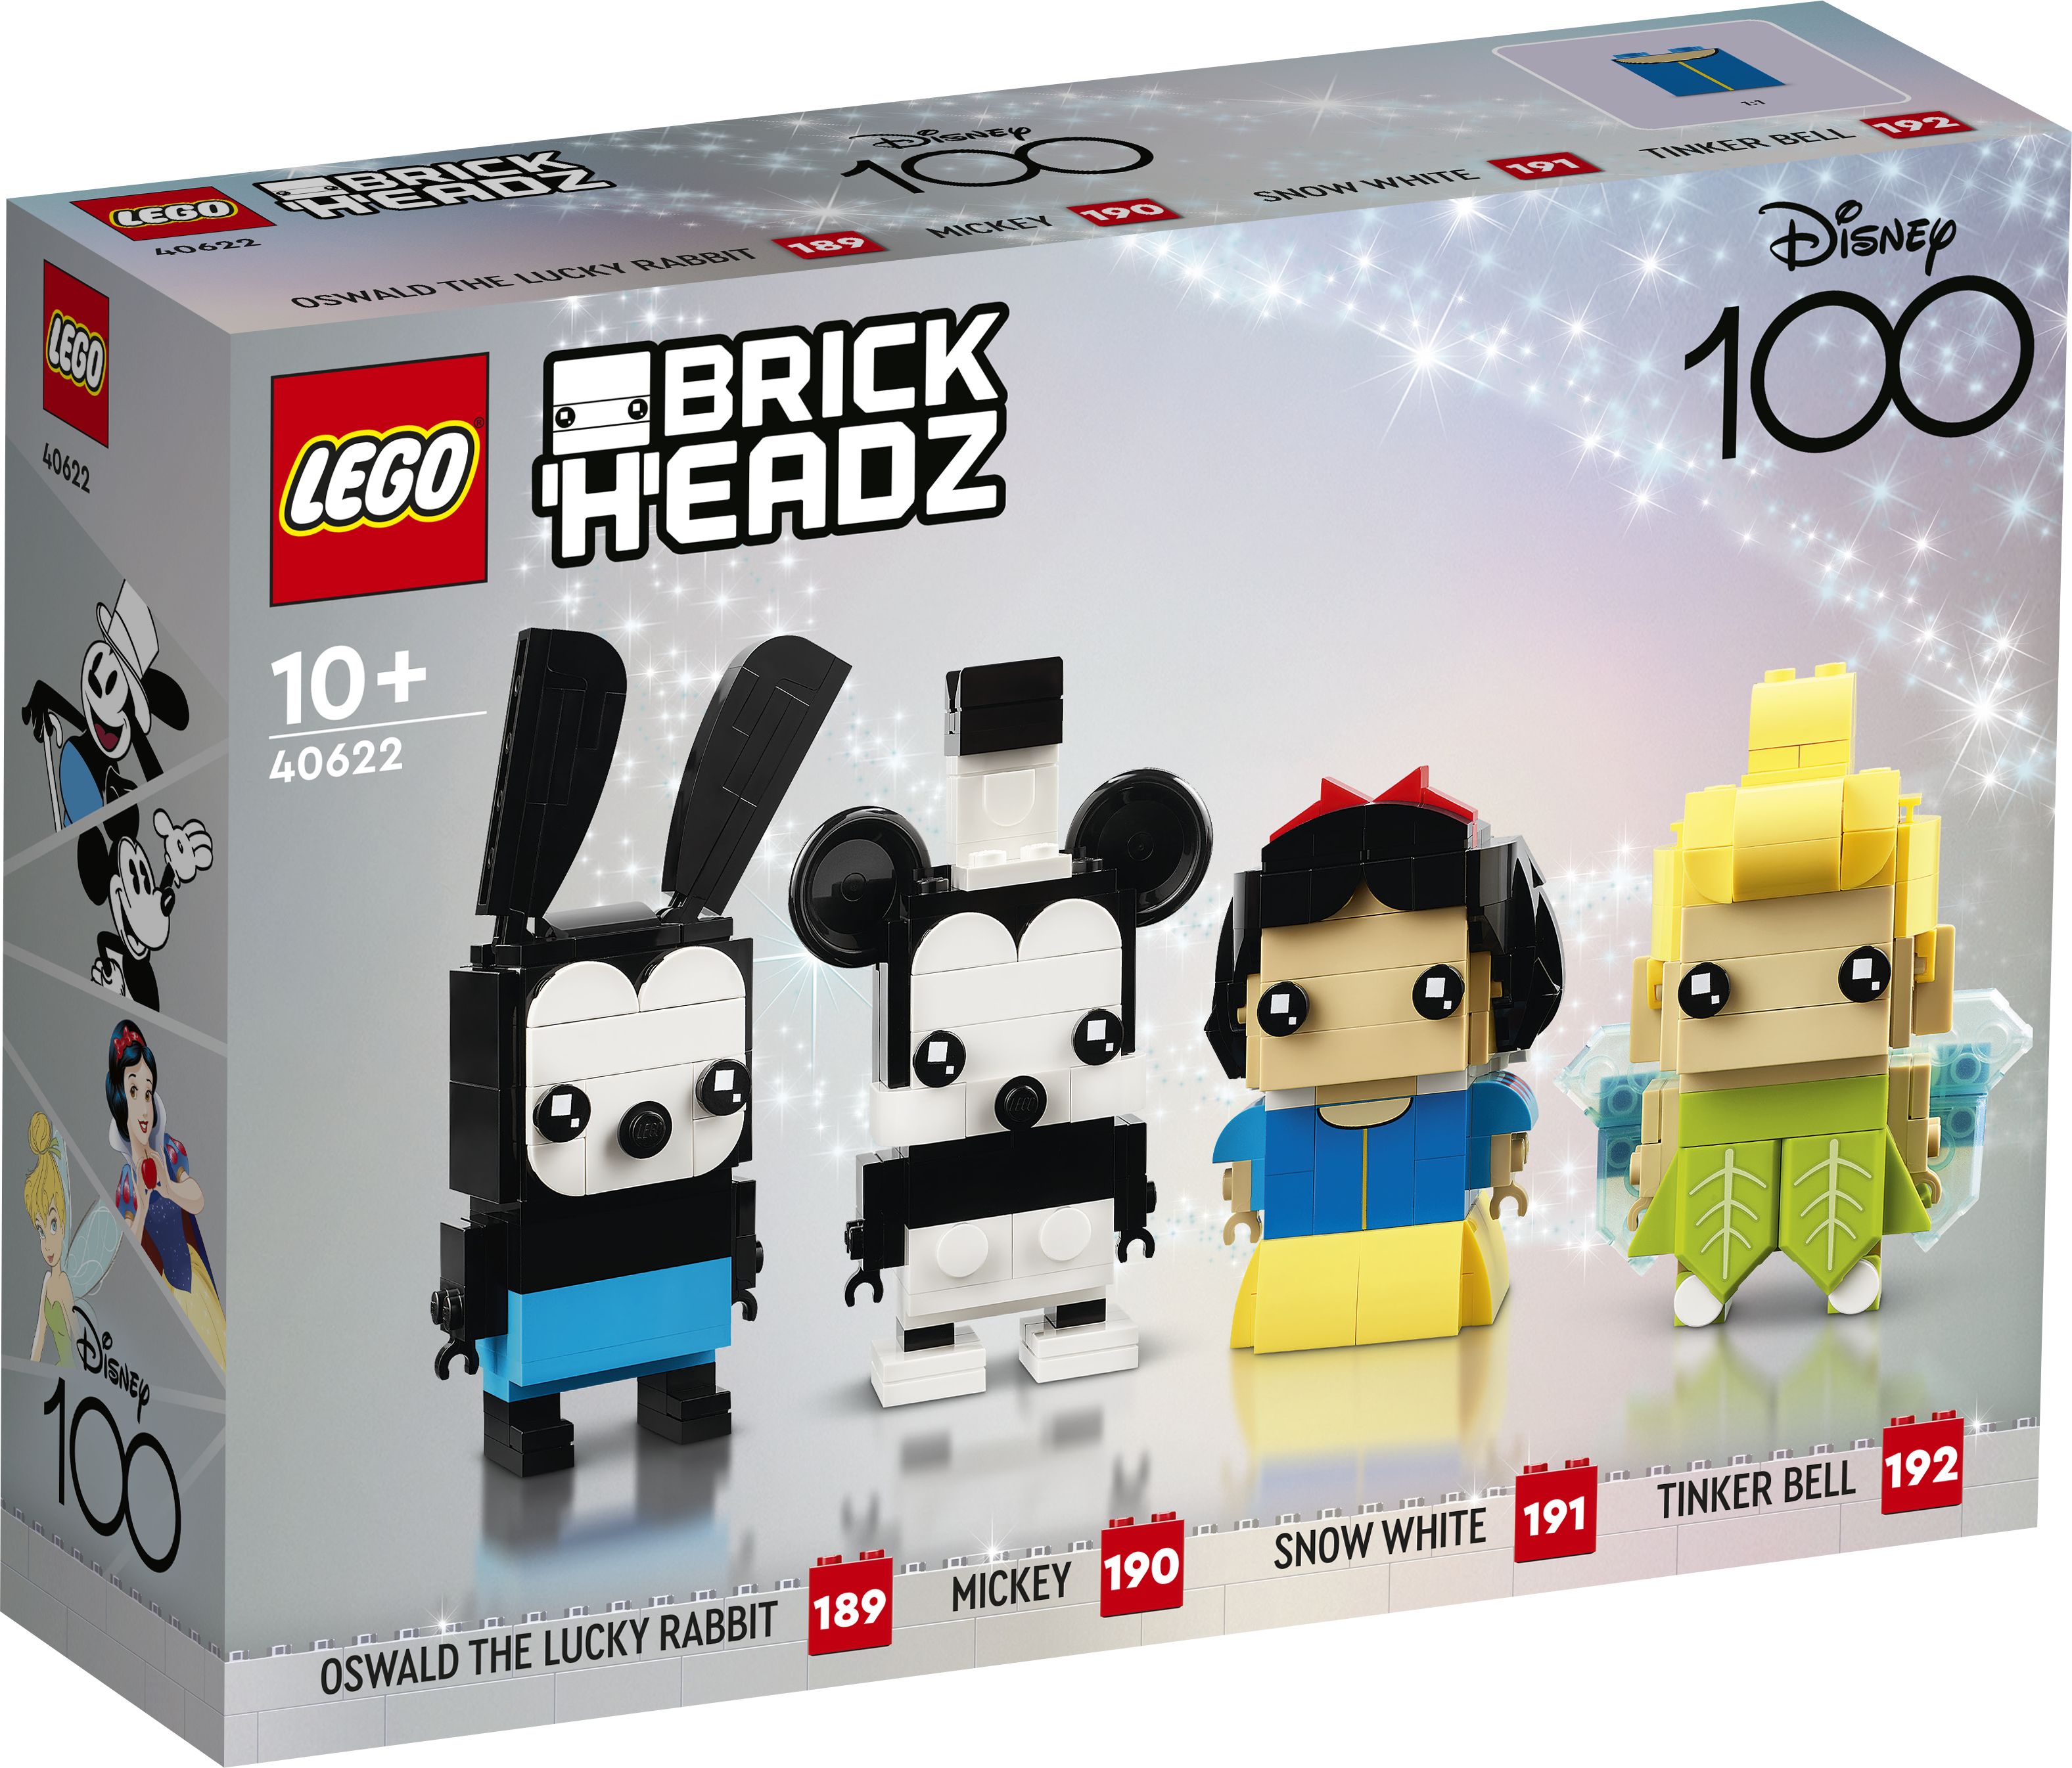 LEGO BrickHeadz 40622 100-jähriges Disney Jubiläum LEGO_40622_Box1_v29.jpg